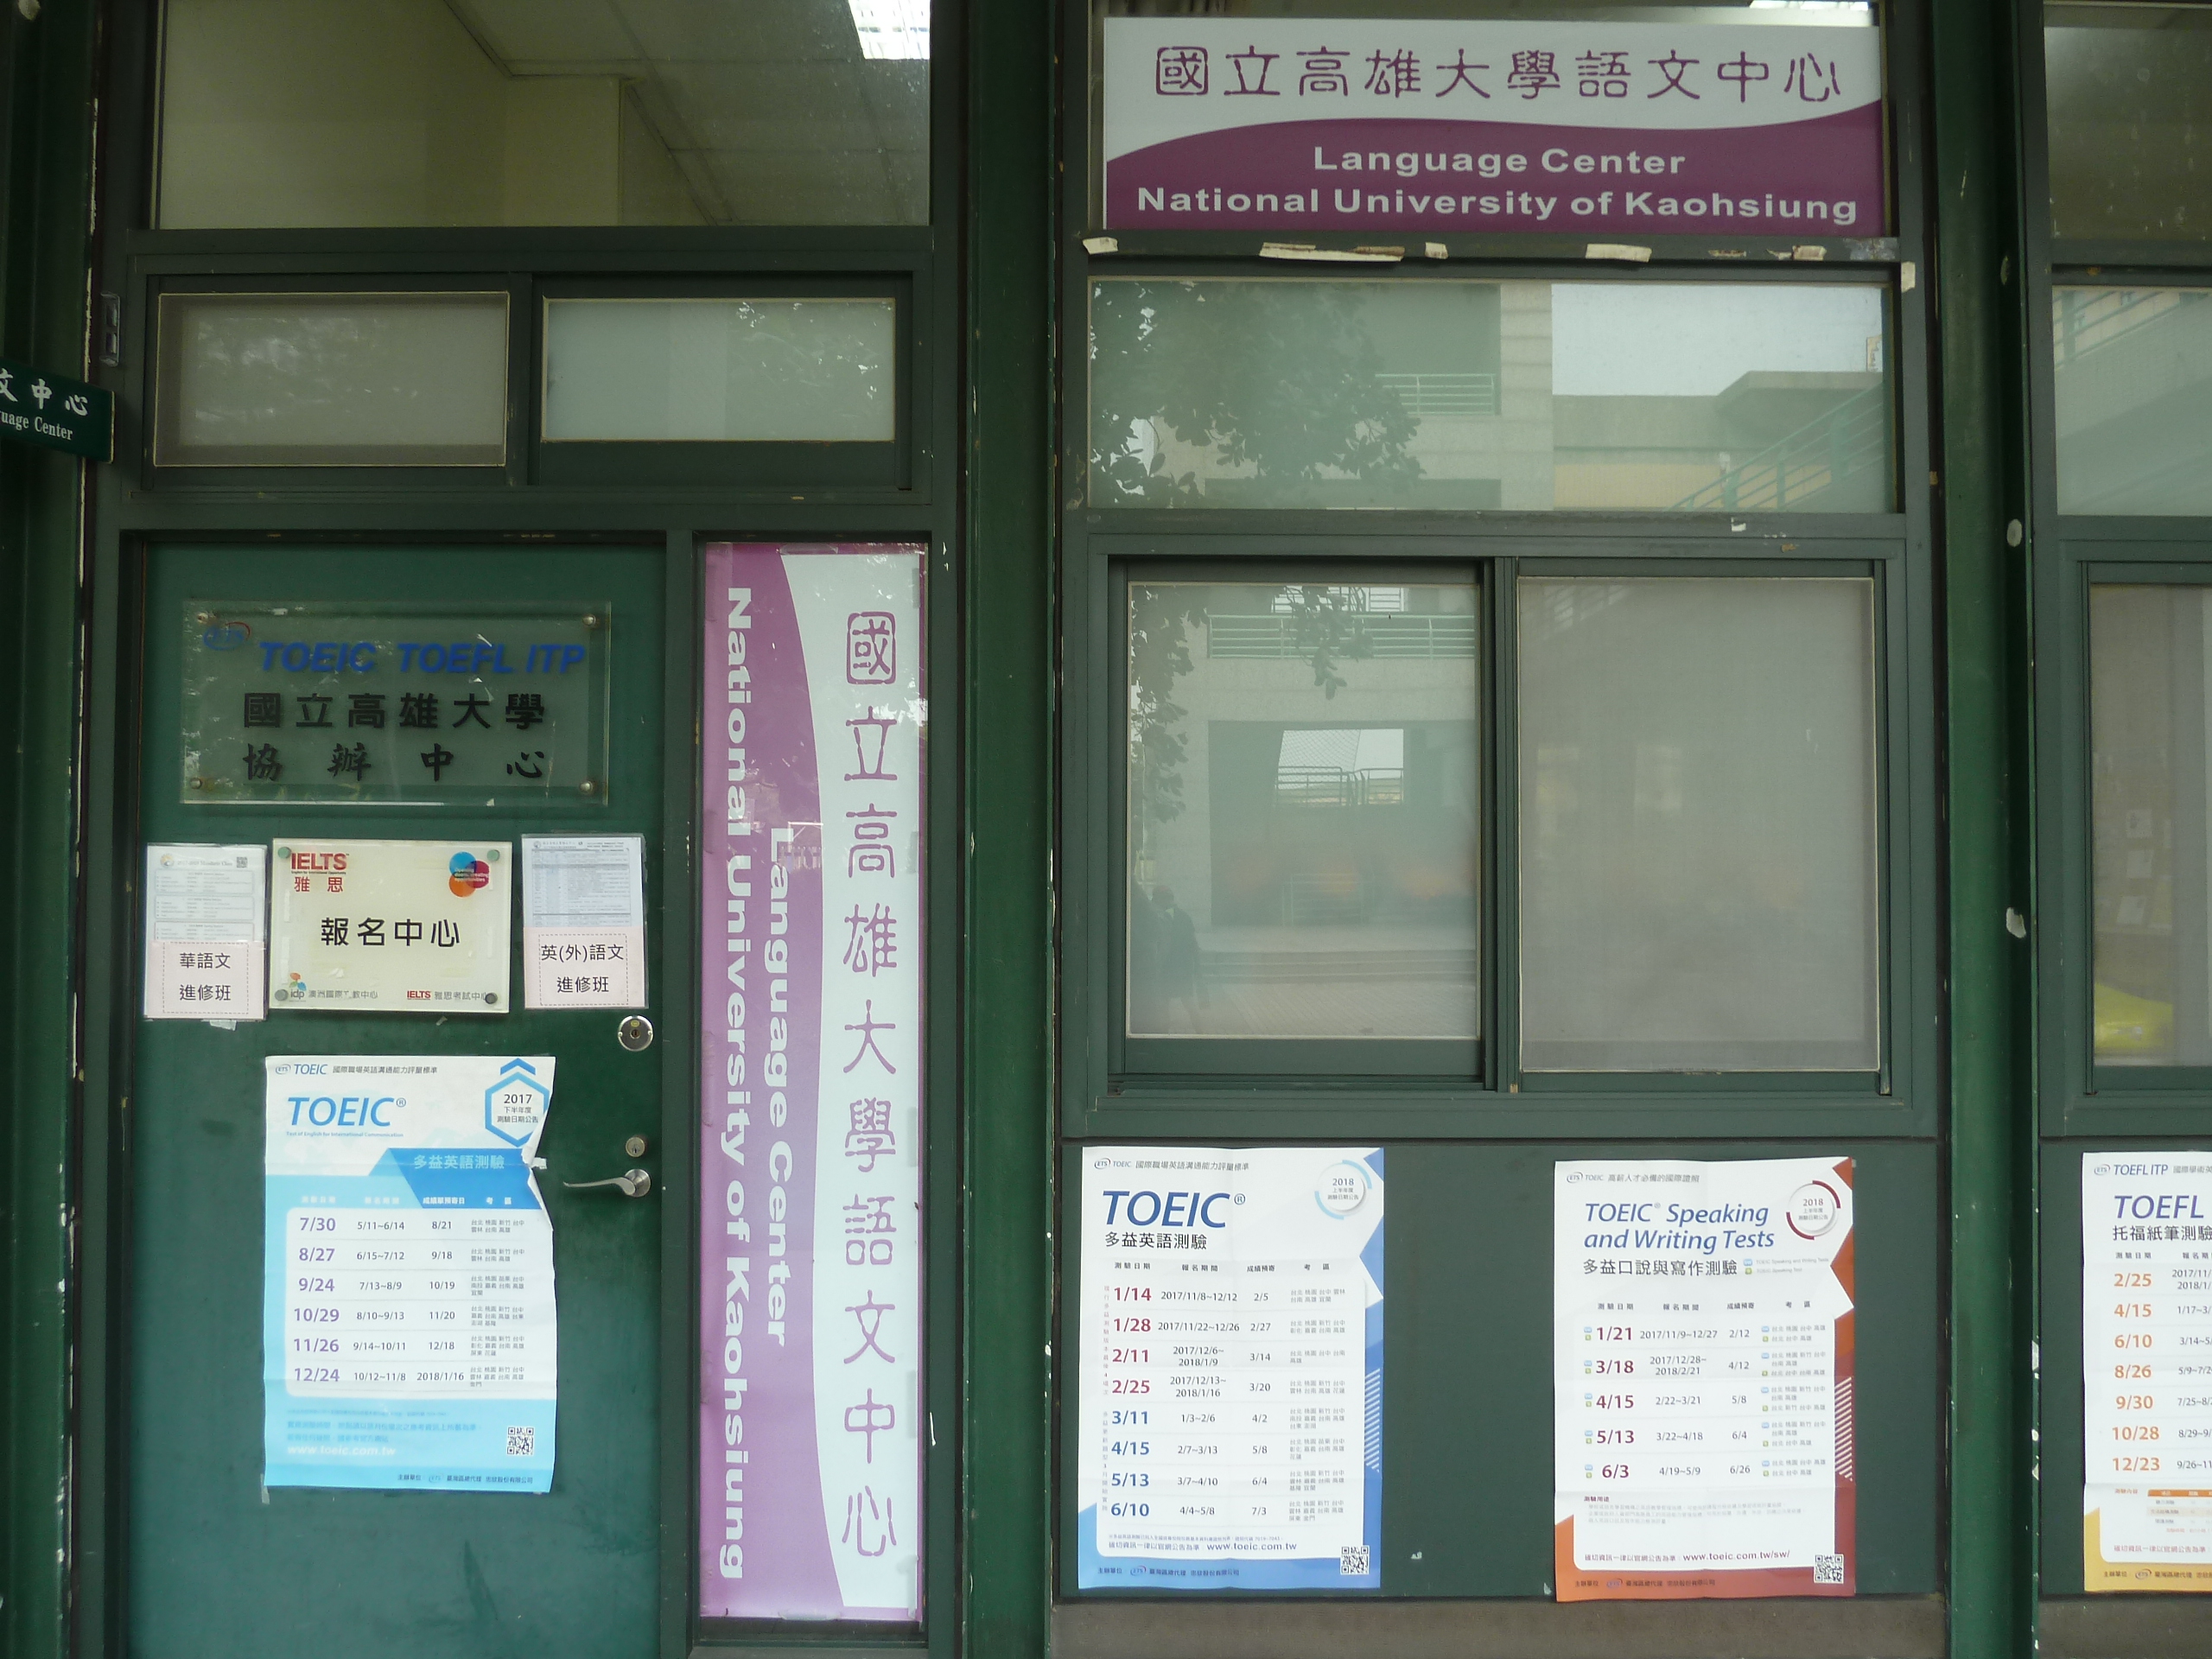 Language Center, National University of Kaohsiung